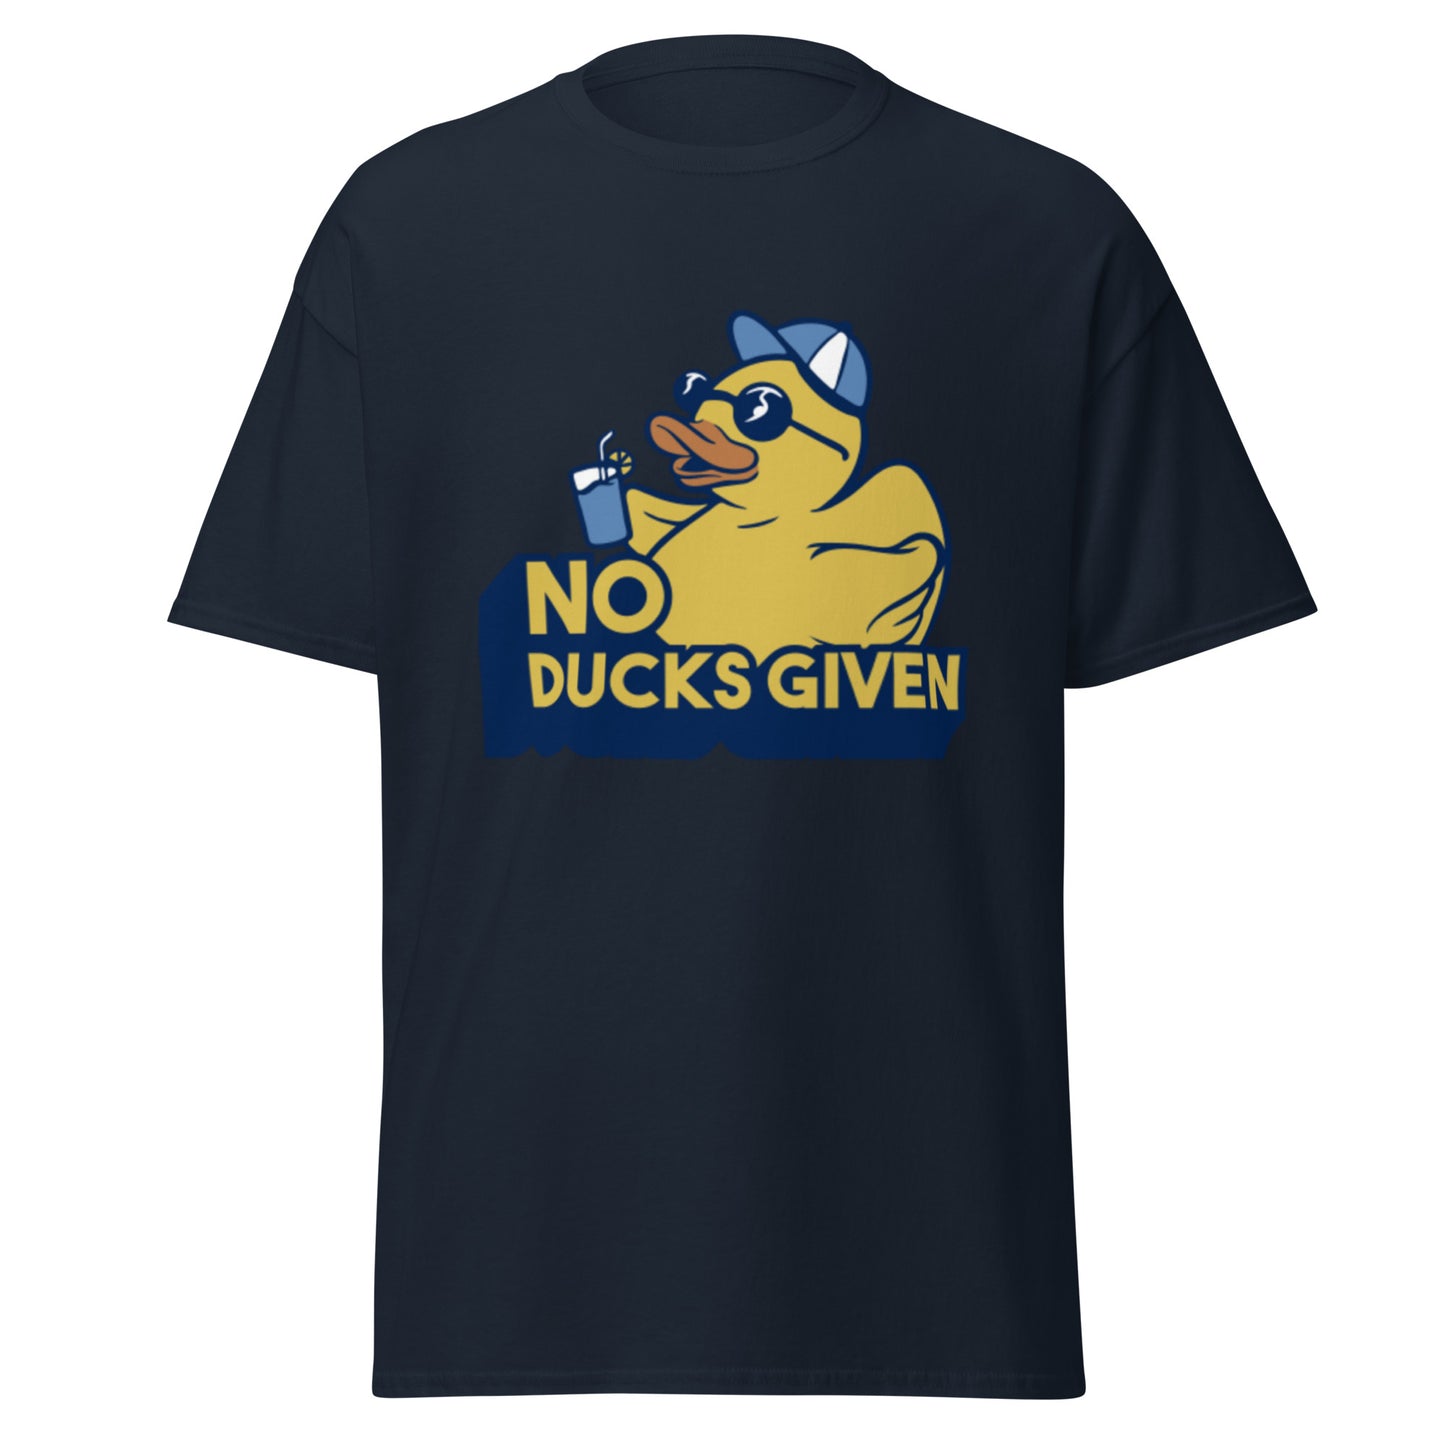 No ducks given T-Shirt